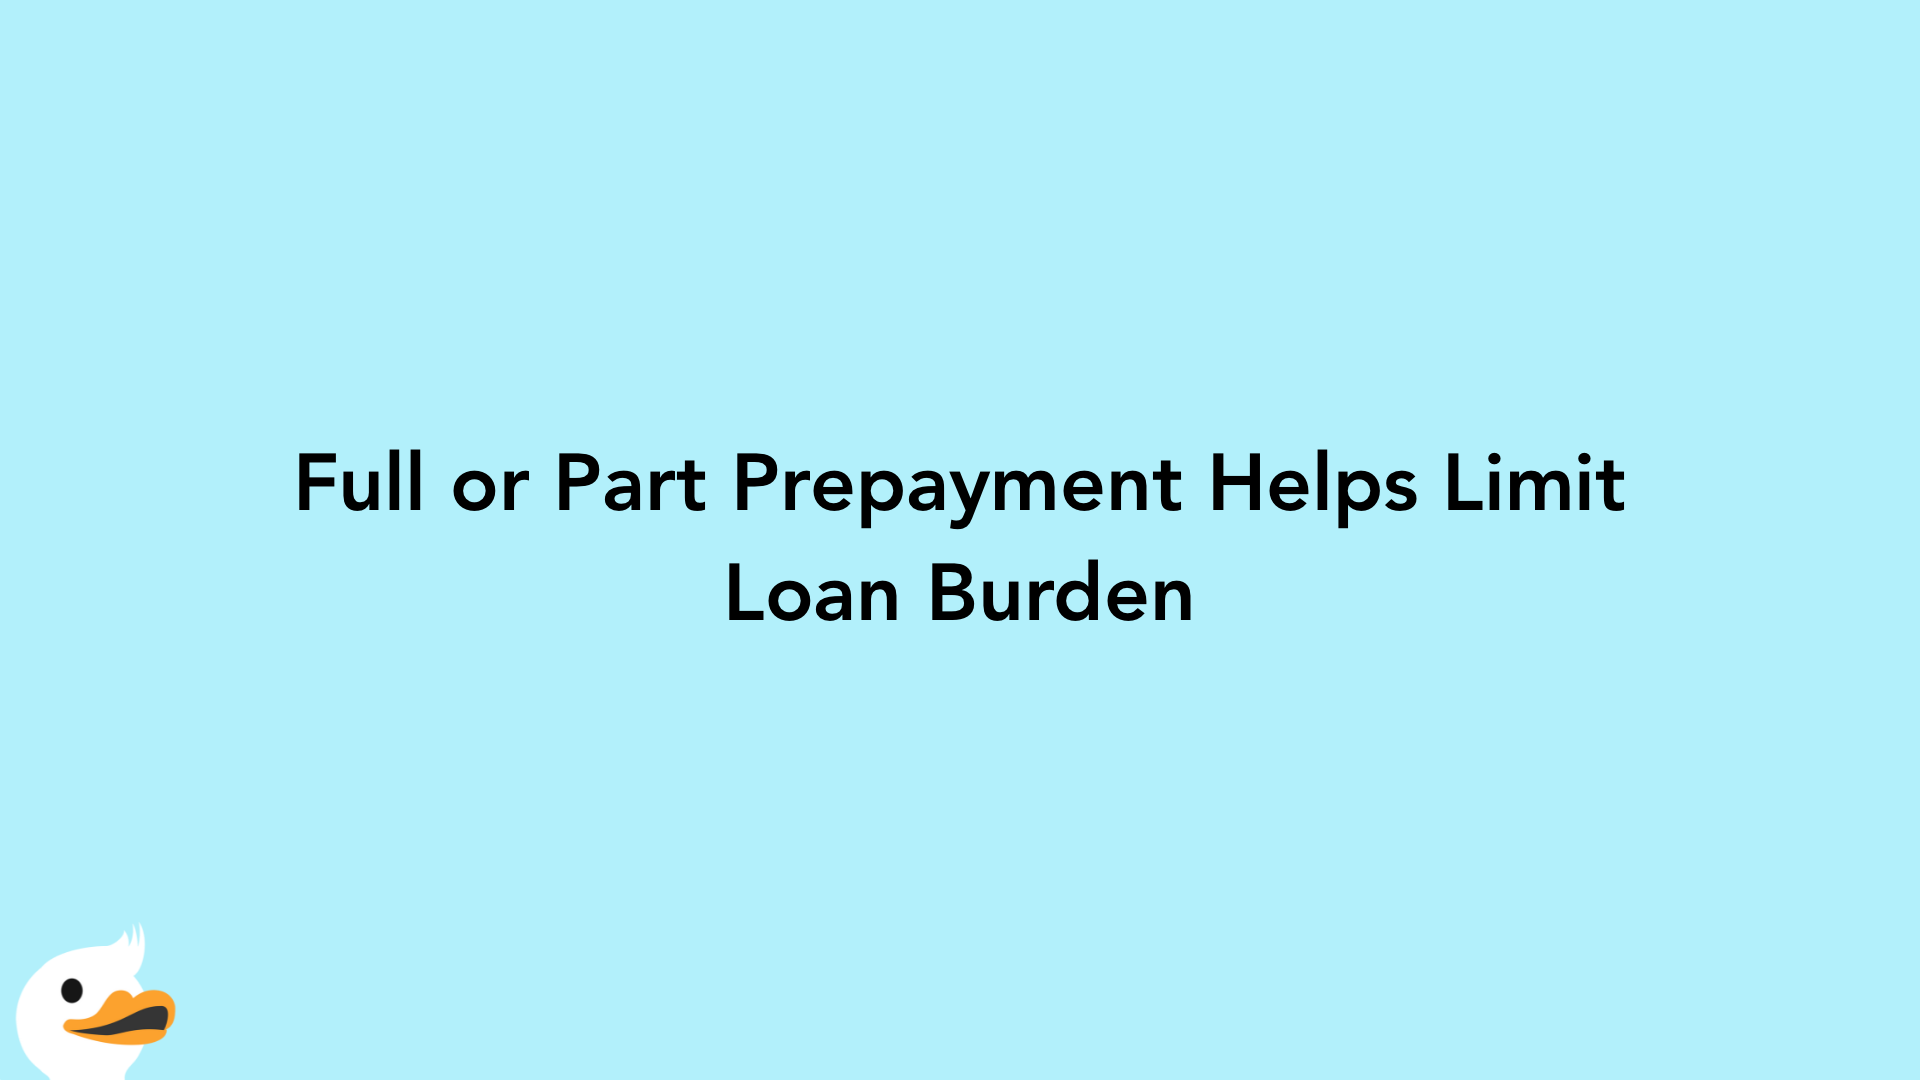 Full or Part Prepayment Helps Limit Loan Burden